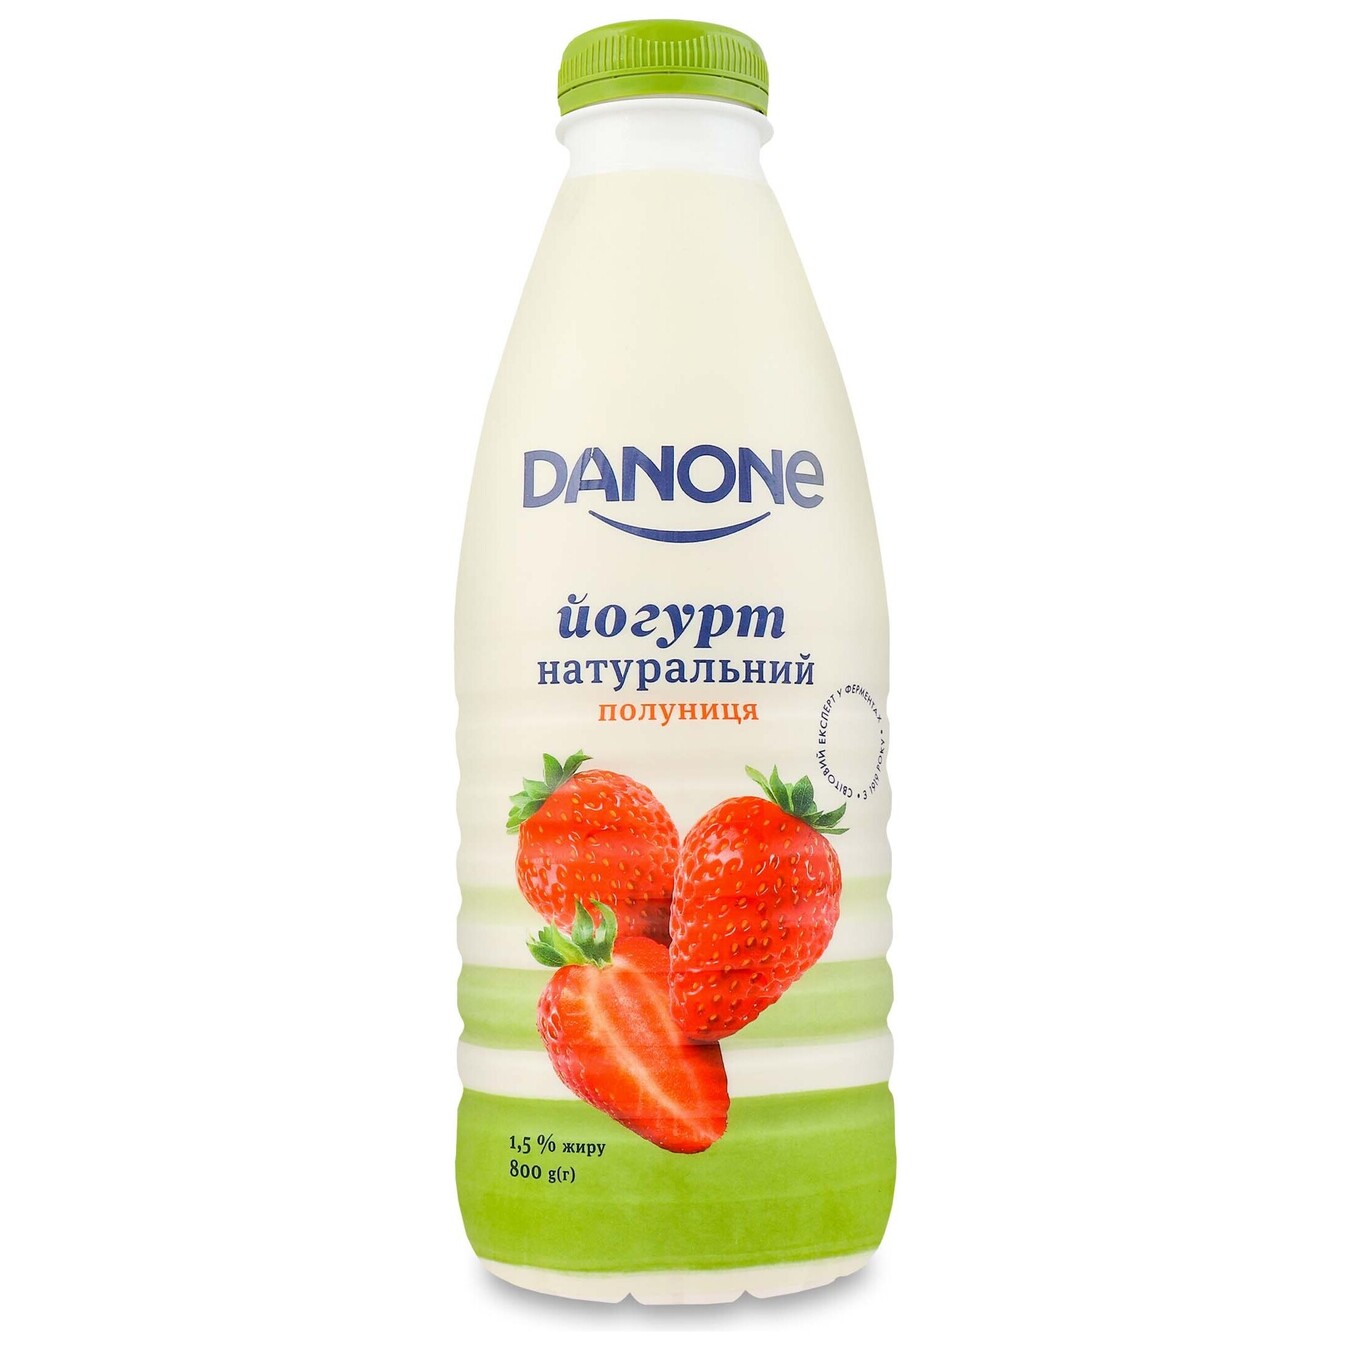 Йогурт Danone полуниця питний 1,5% пет 800г